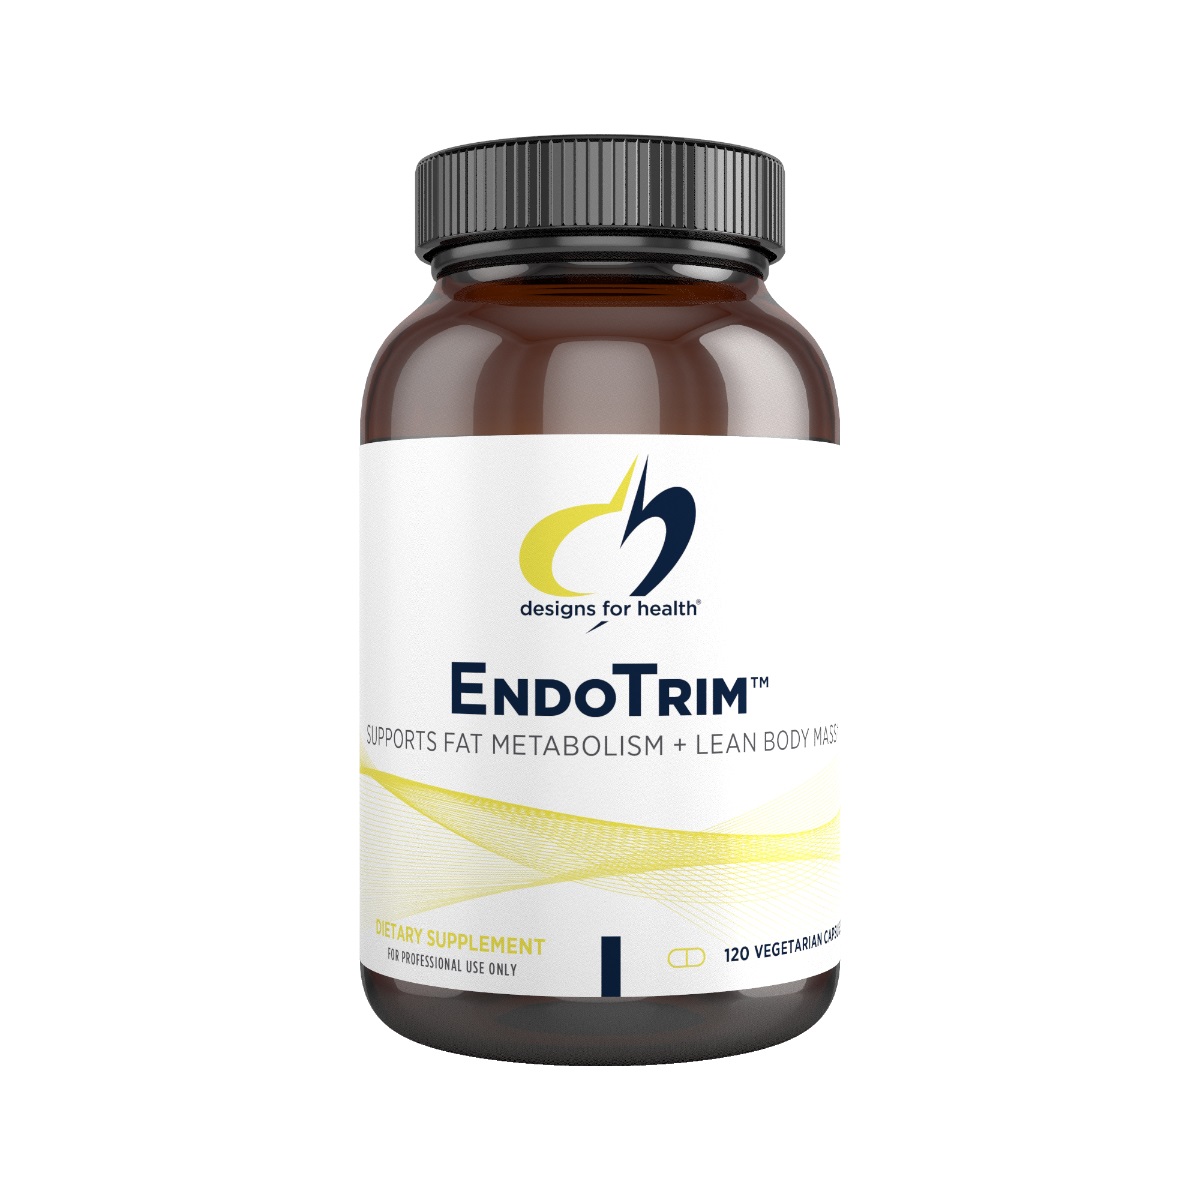 Endotrim - Designs for Health